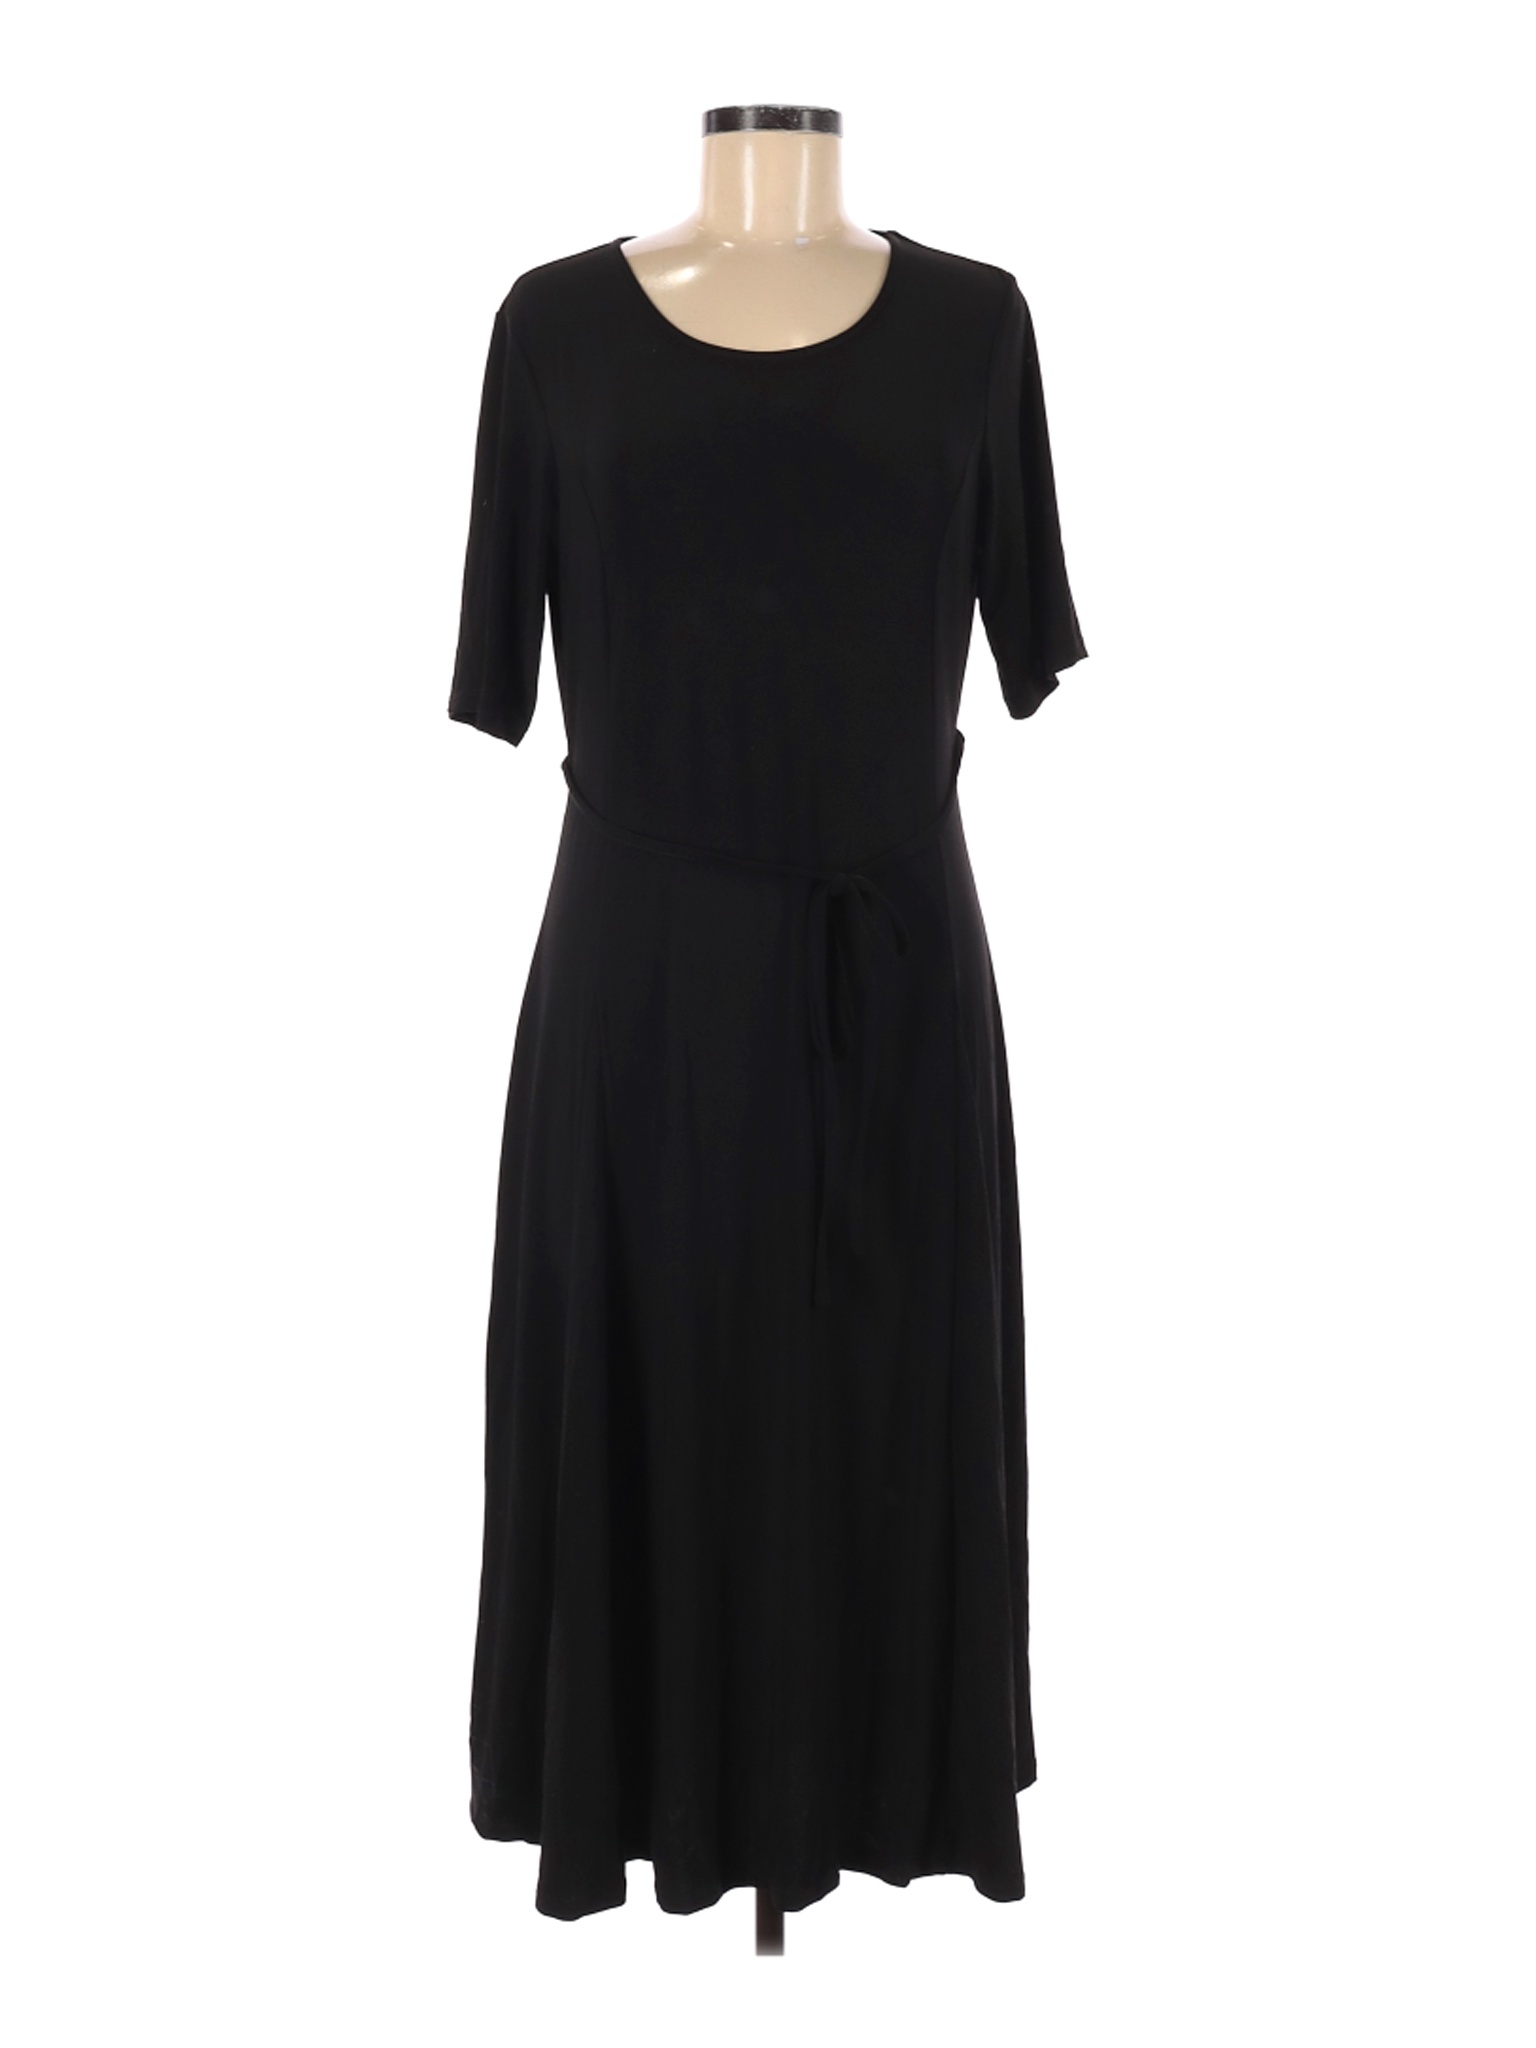 NWT Nina Leonard Women Black Casual Dress M Petites | eBay